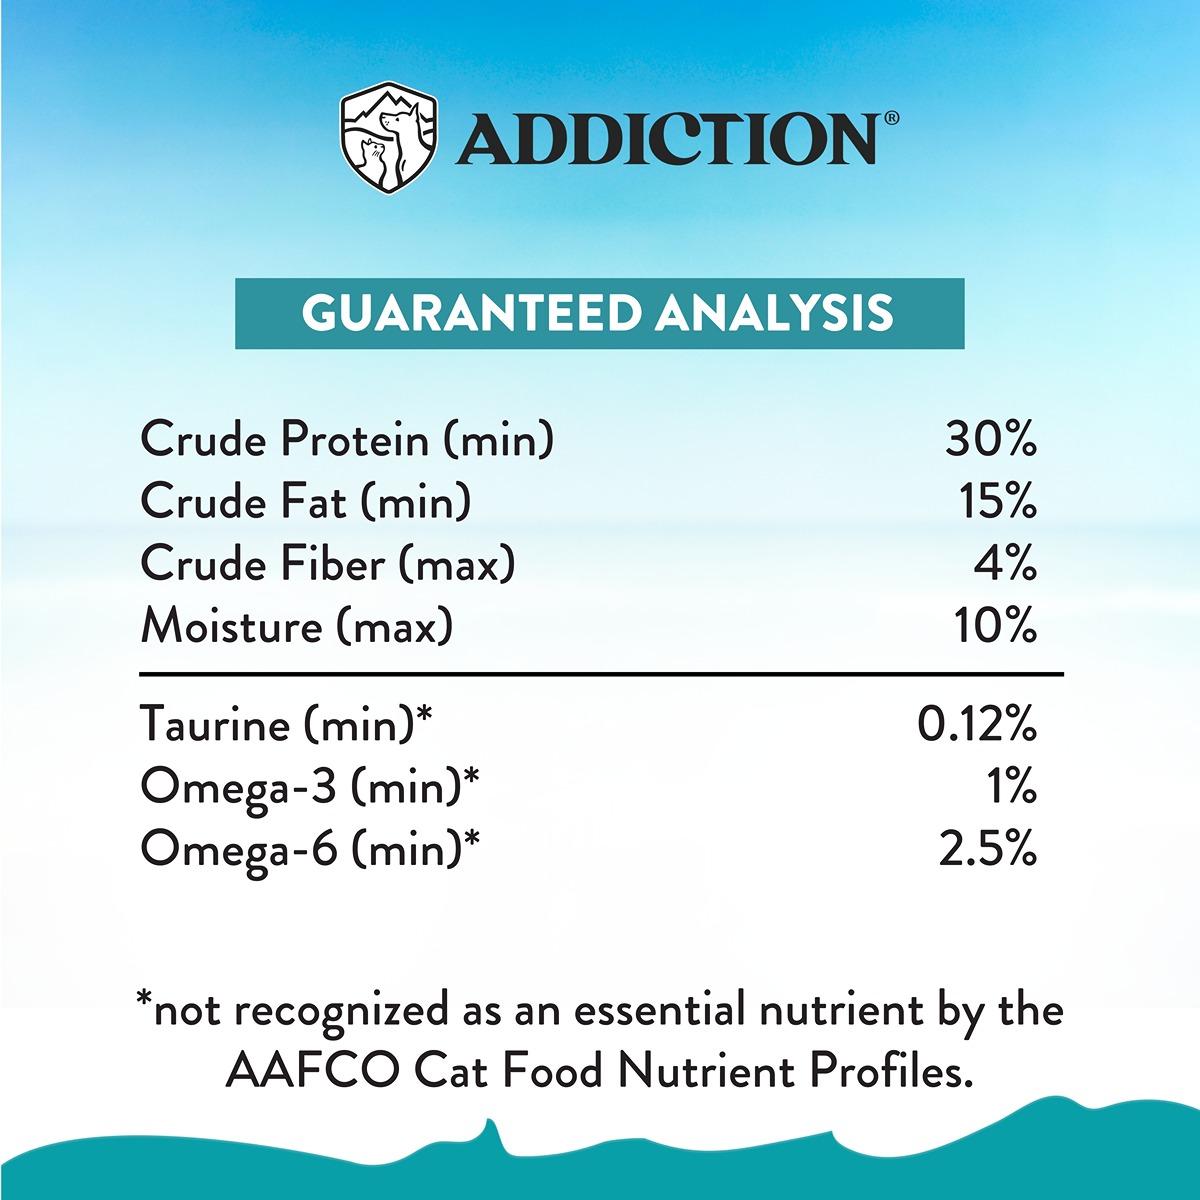 Addiction Salmon Bleu, Complete & Balanced, Skin & Coat Dry Cat Food